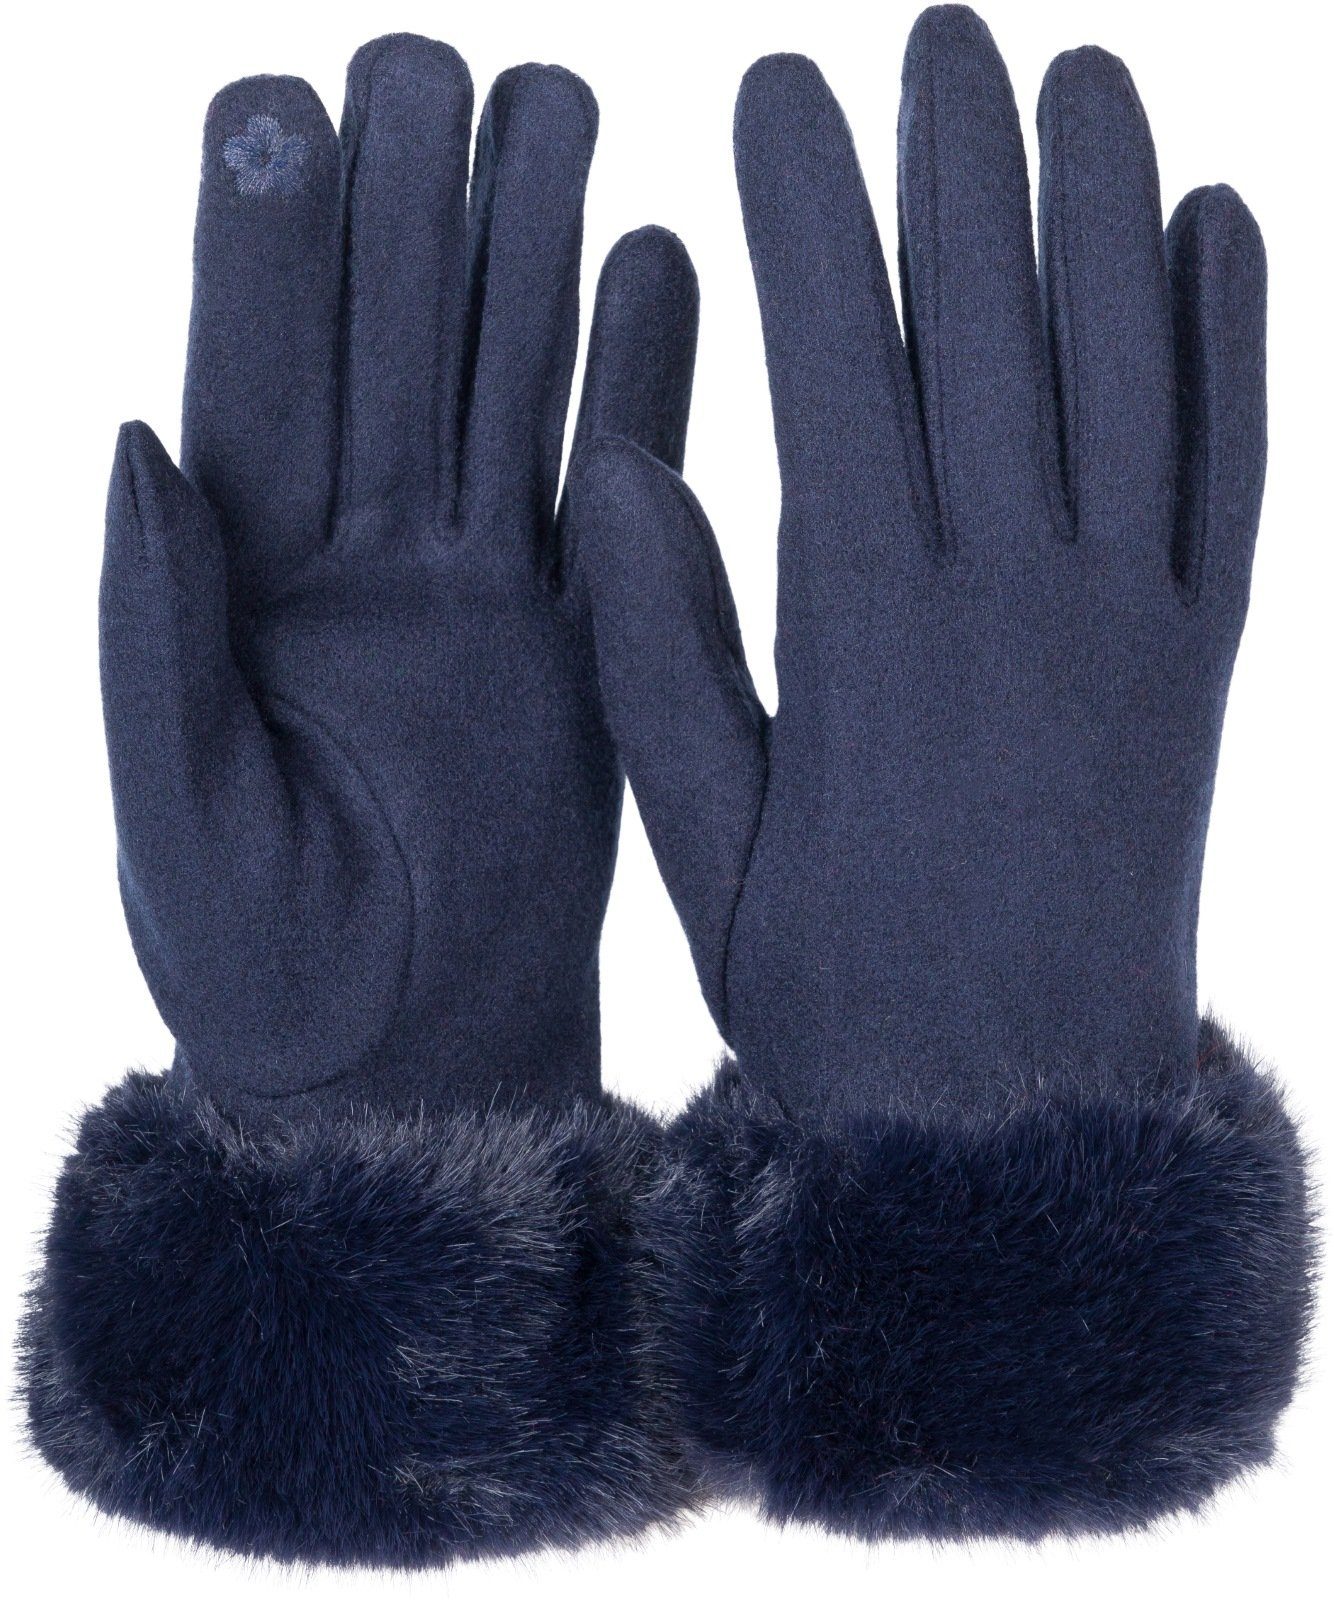 styleBREAKER Fleecehandschuhe Unifarbene Touchscreen Handschuhe mit Kunstfell Dunkelblau | Fleecehandschuhe